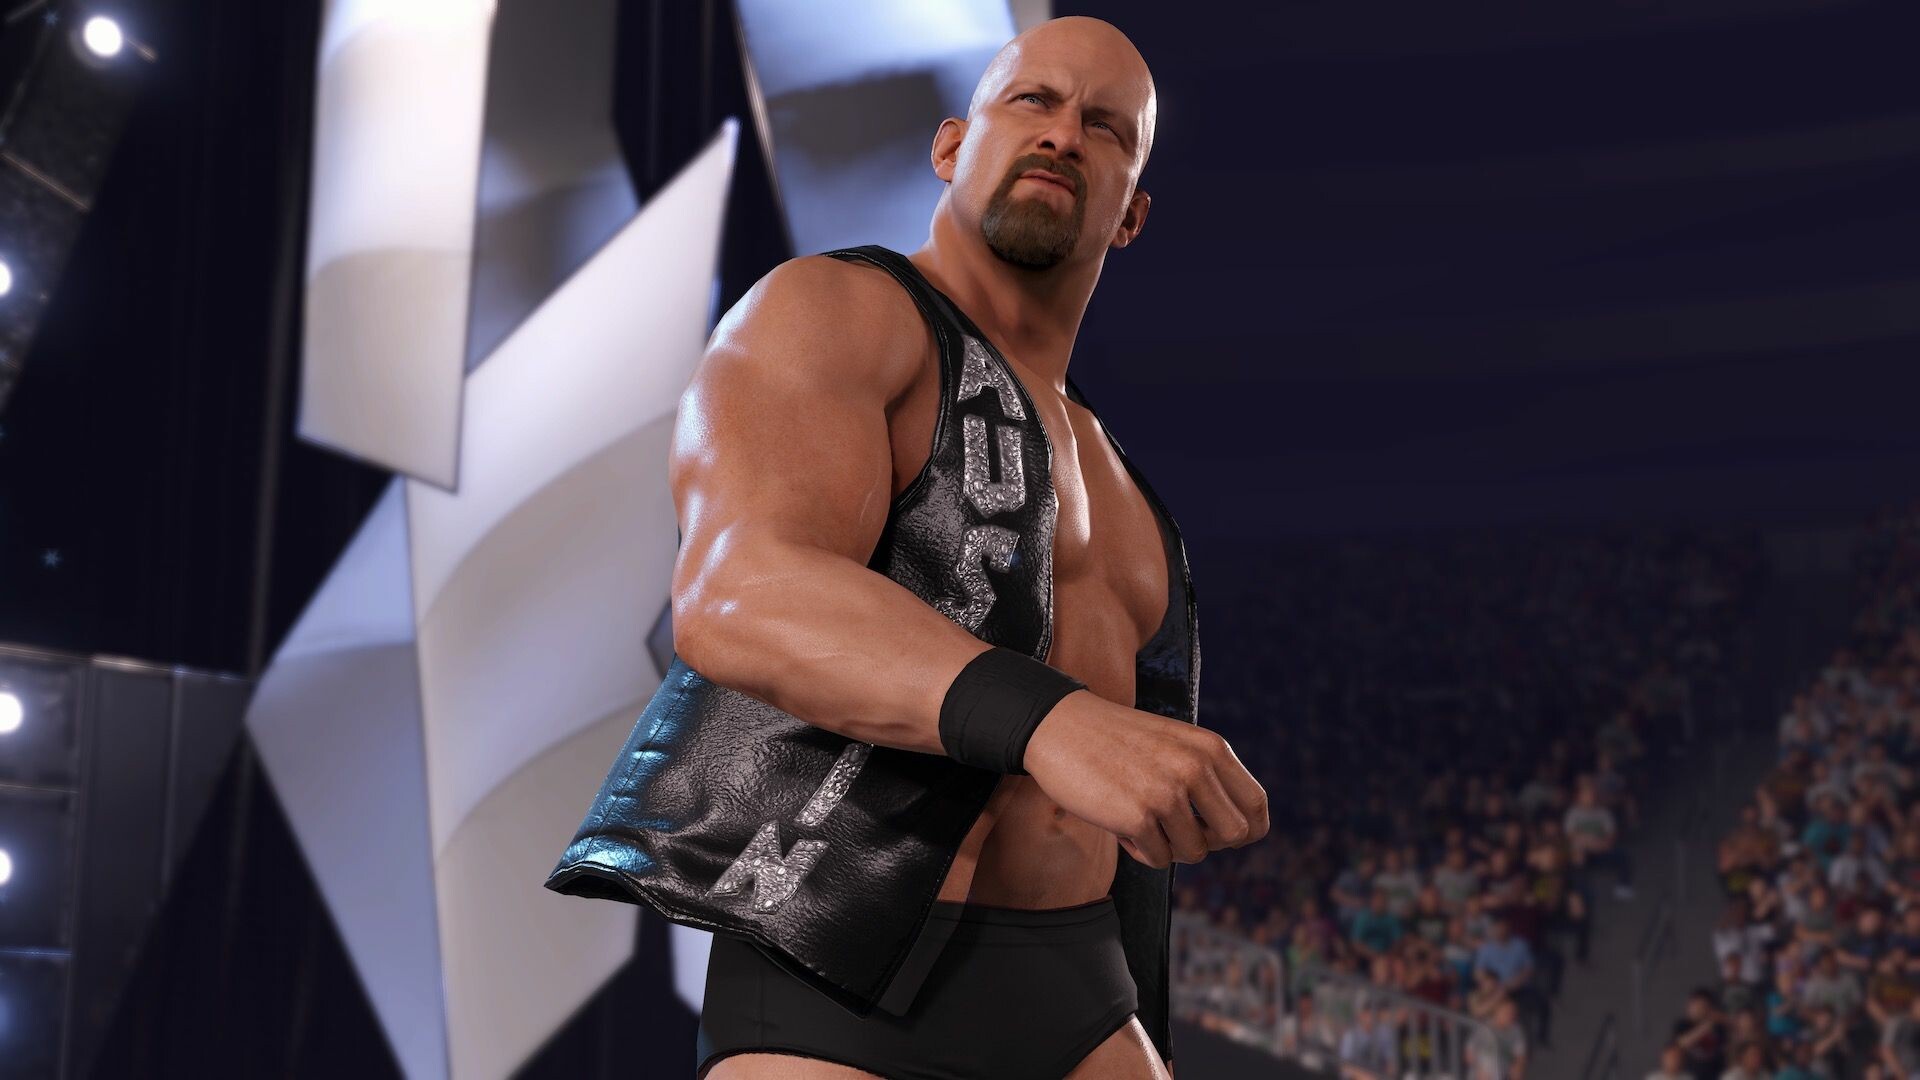 Video Game WWE 2K23 HD Wallpaper | Background Image